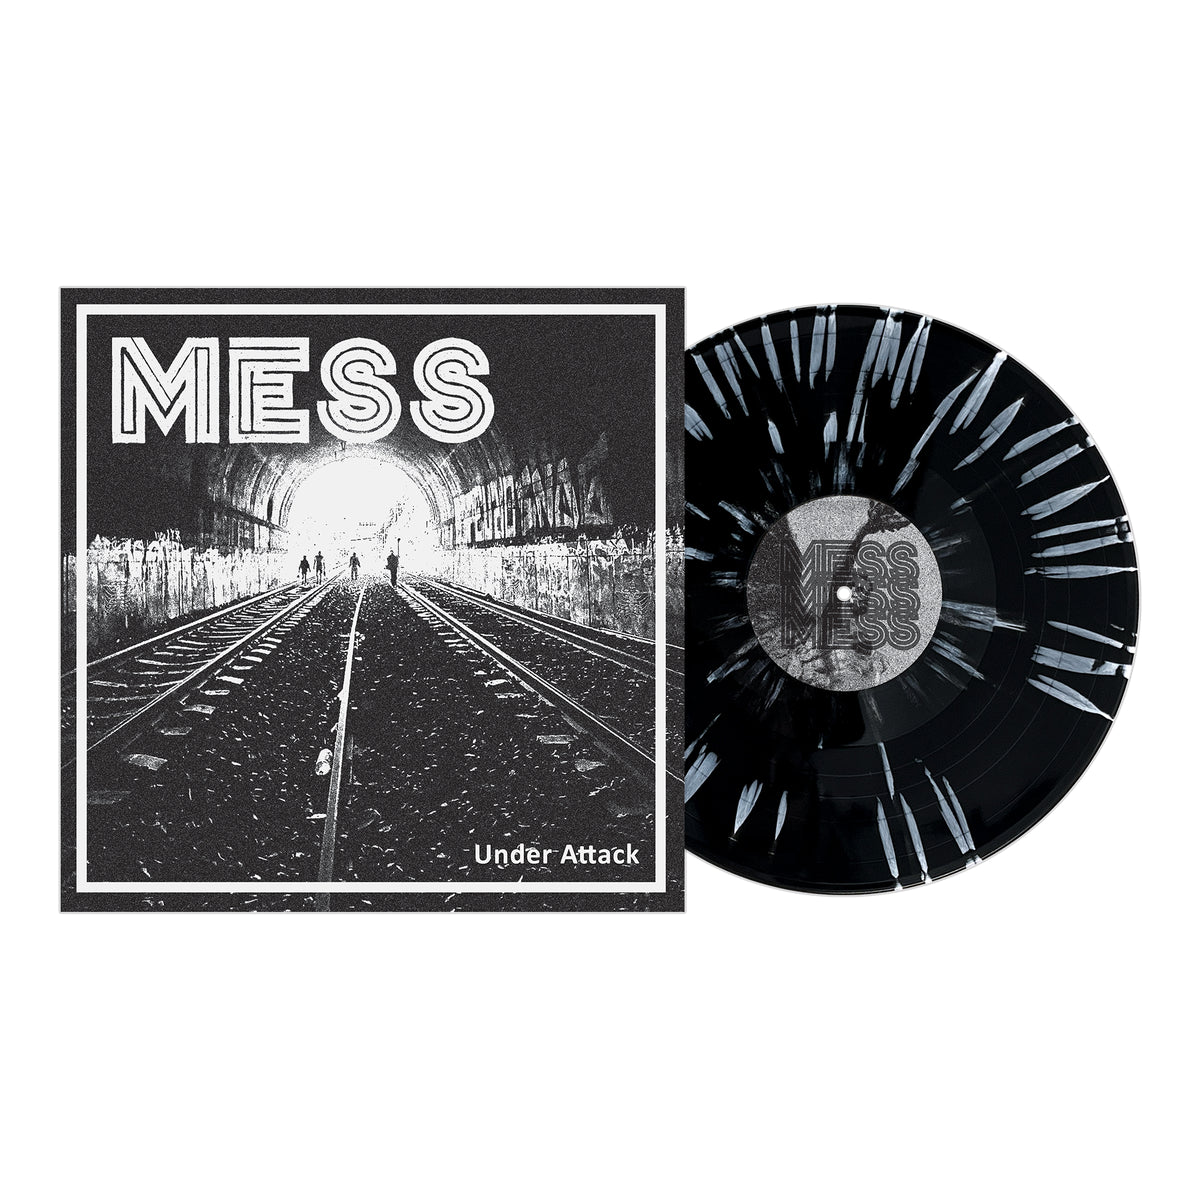 Mess - Under Attack - Black w/ White Splatter - Vinyl LP